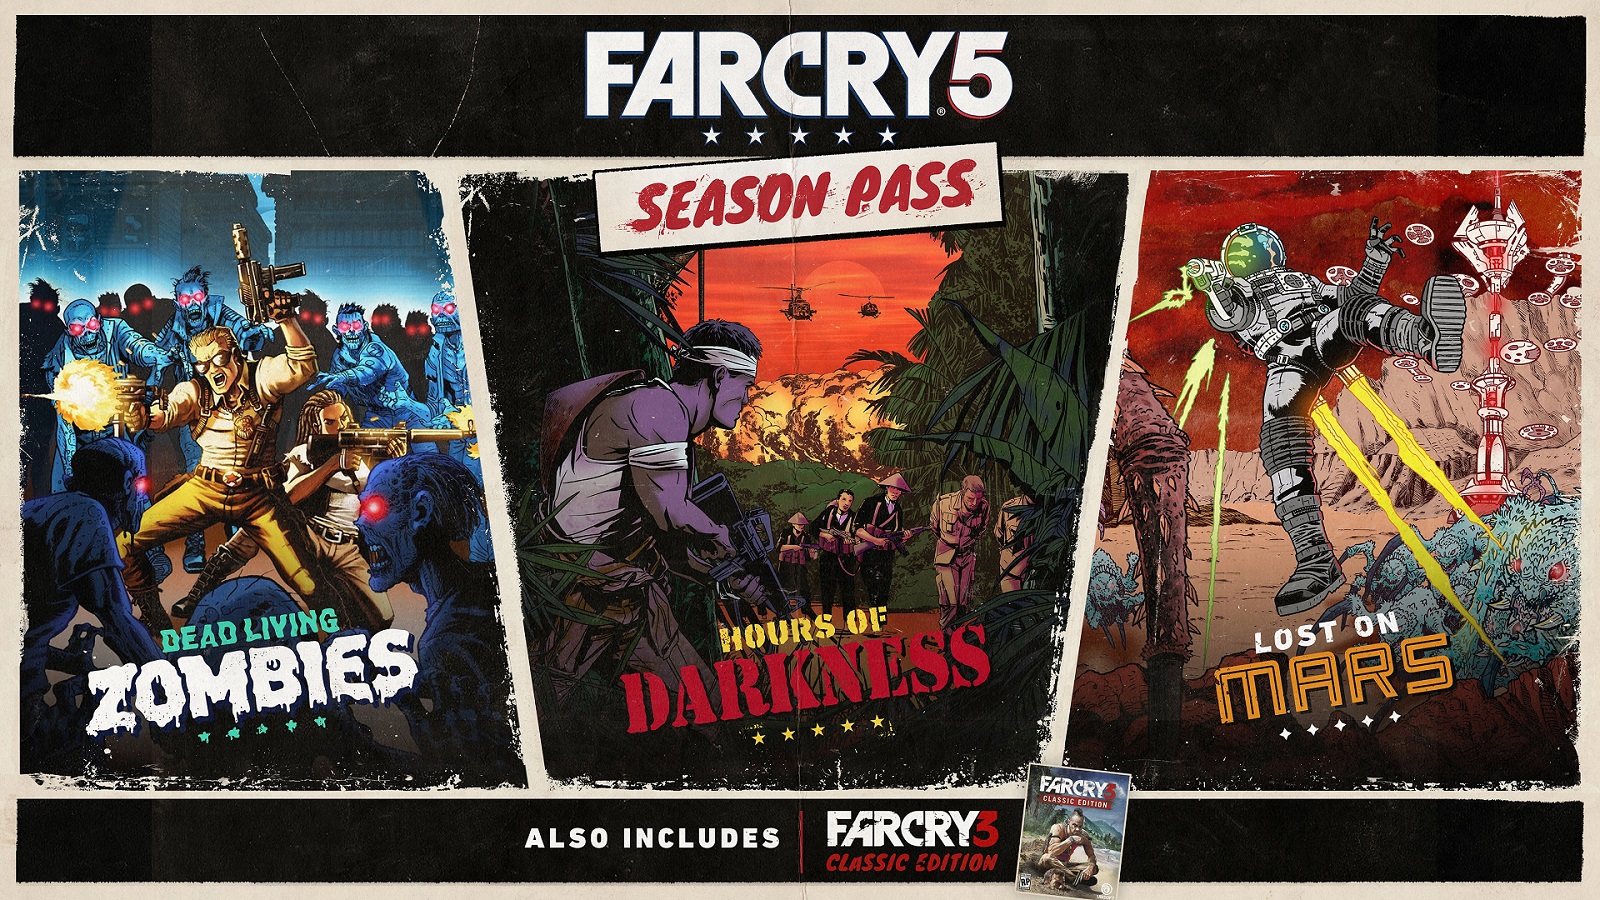 Far Cry 5 Season Pass Announced, Includes Far Cry 3 Classic